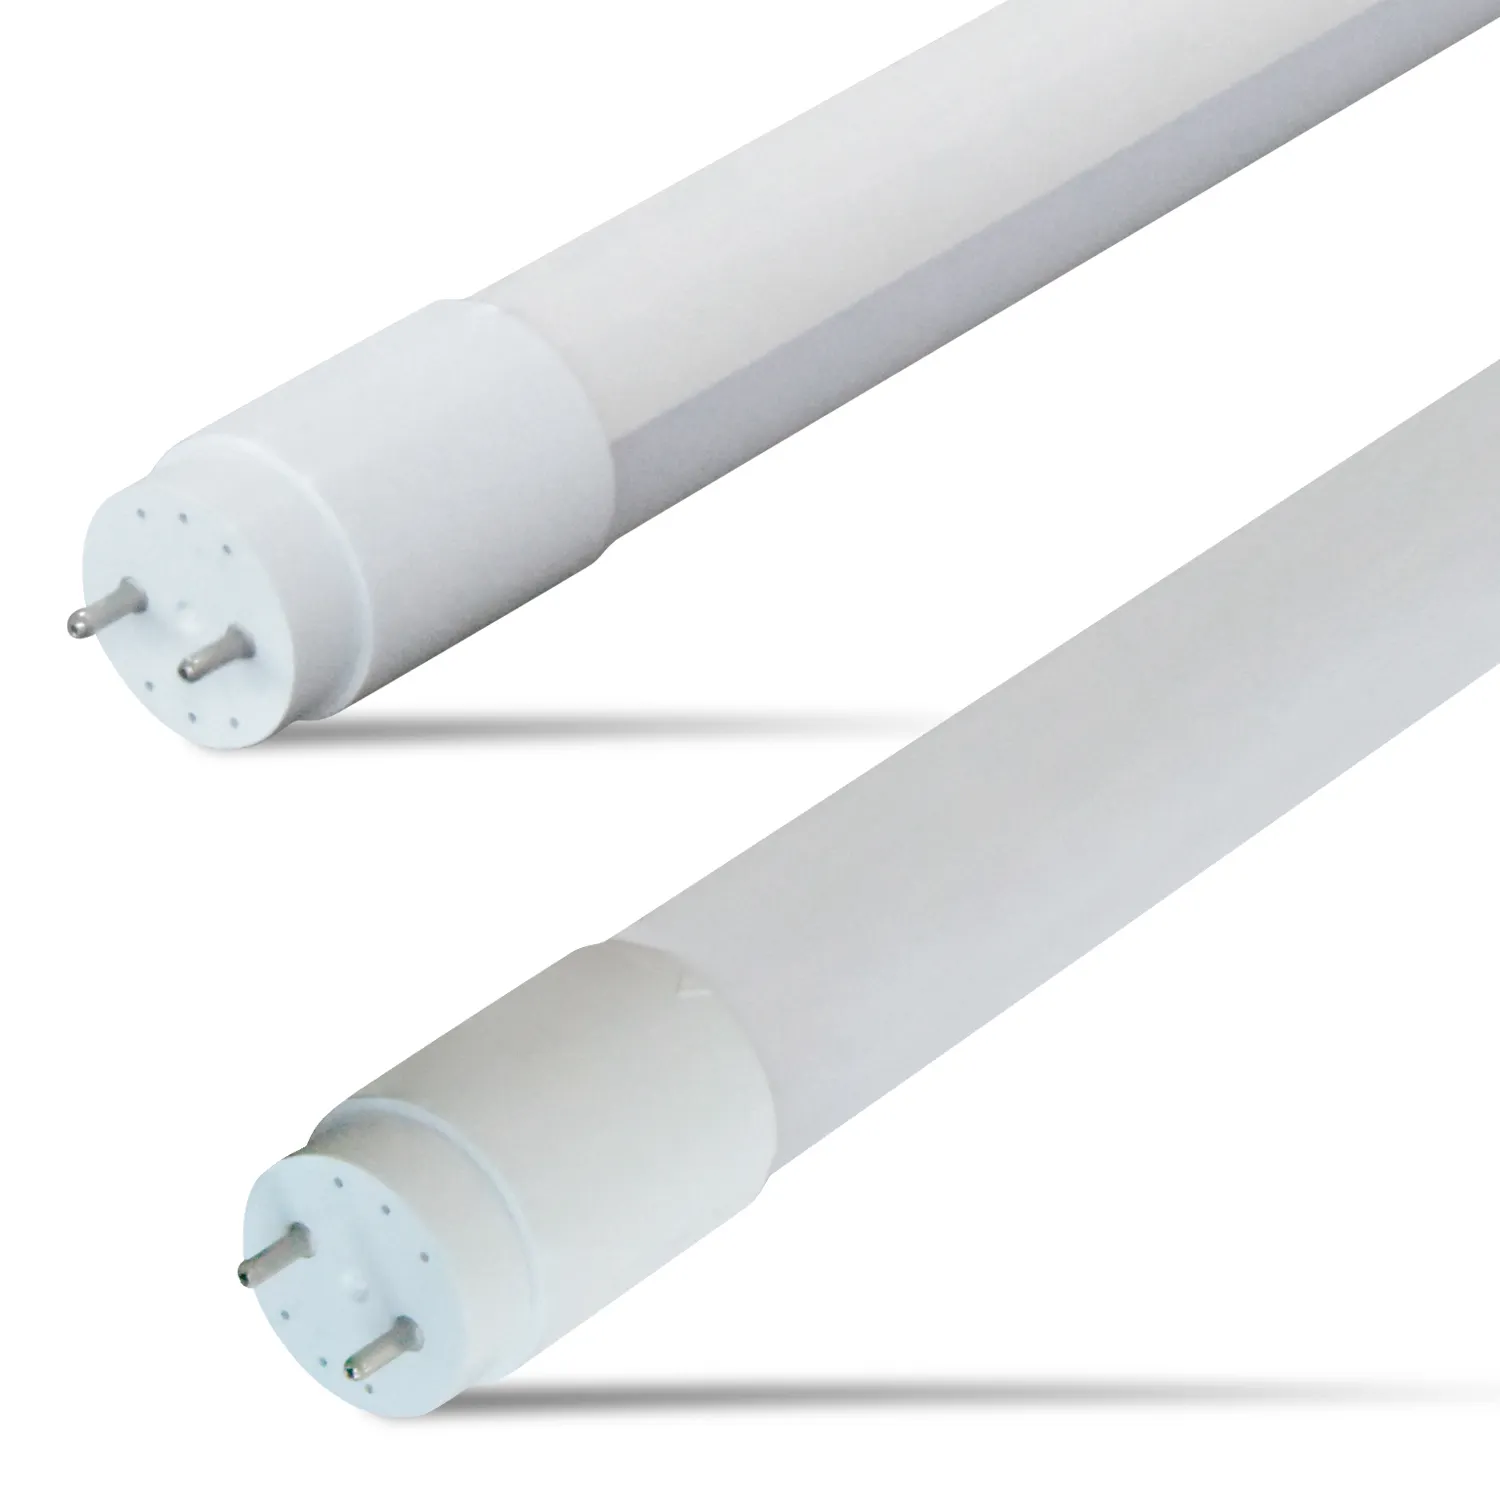 Banqcn T8 luces de tubo led nano PC sin parpadeo emisión uniforme alta transparencia PC pantalla resistencia a la compresión